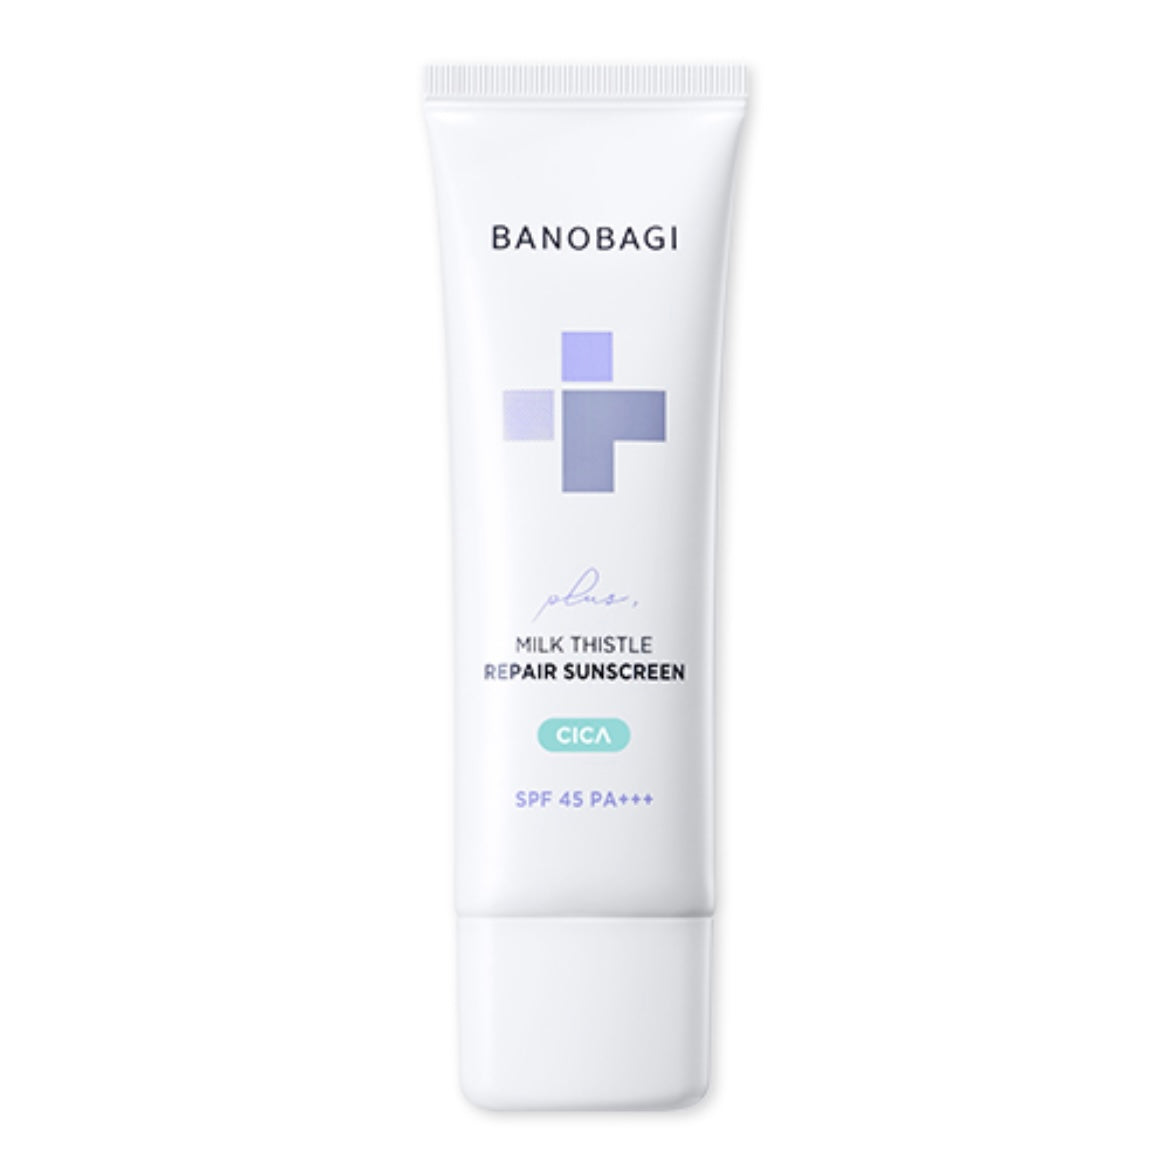 Banobagi Milk Thistle Repair Cica Sunscreen Plus SPF45+ PA+++